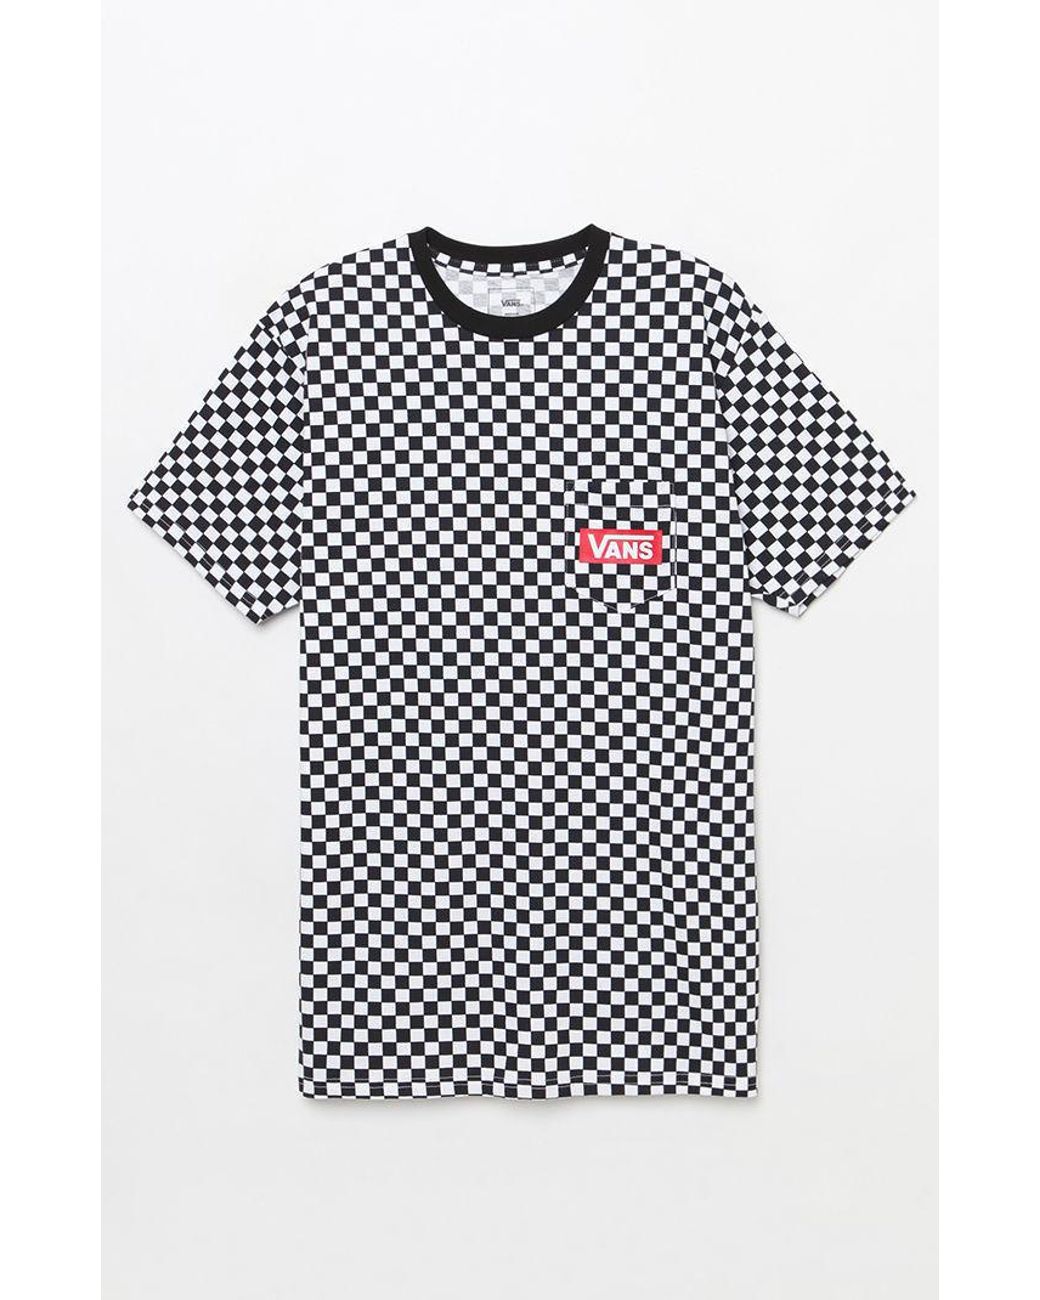 Pebble Diplomatic issues Take a risk Vans Checker Print White & Black Pocket T-shirt for Men | Lyst